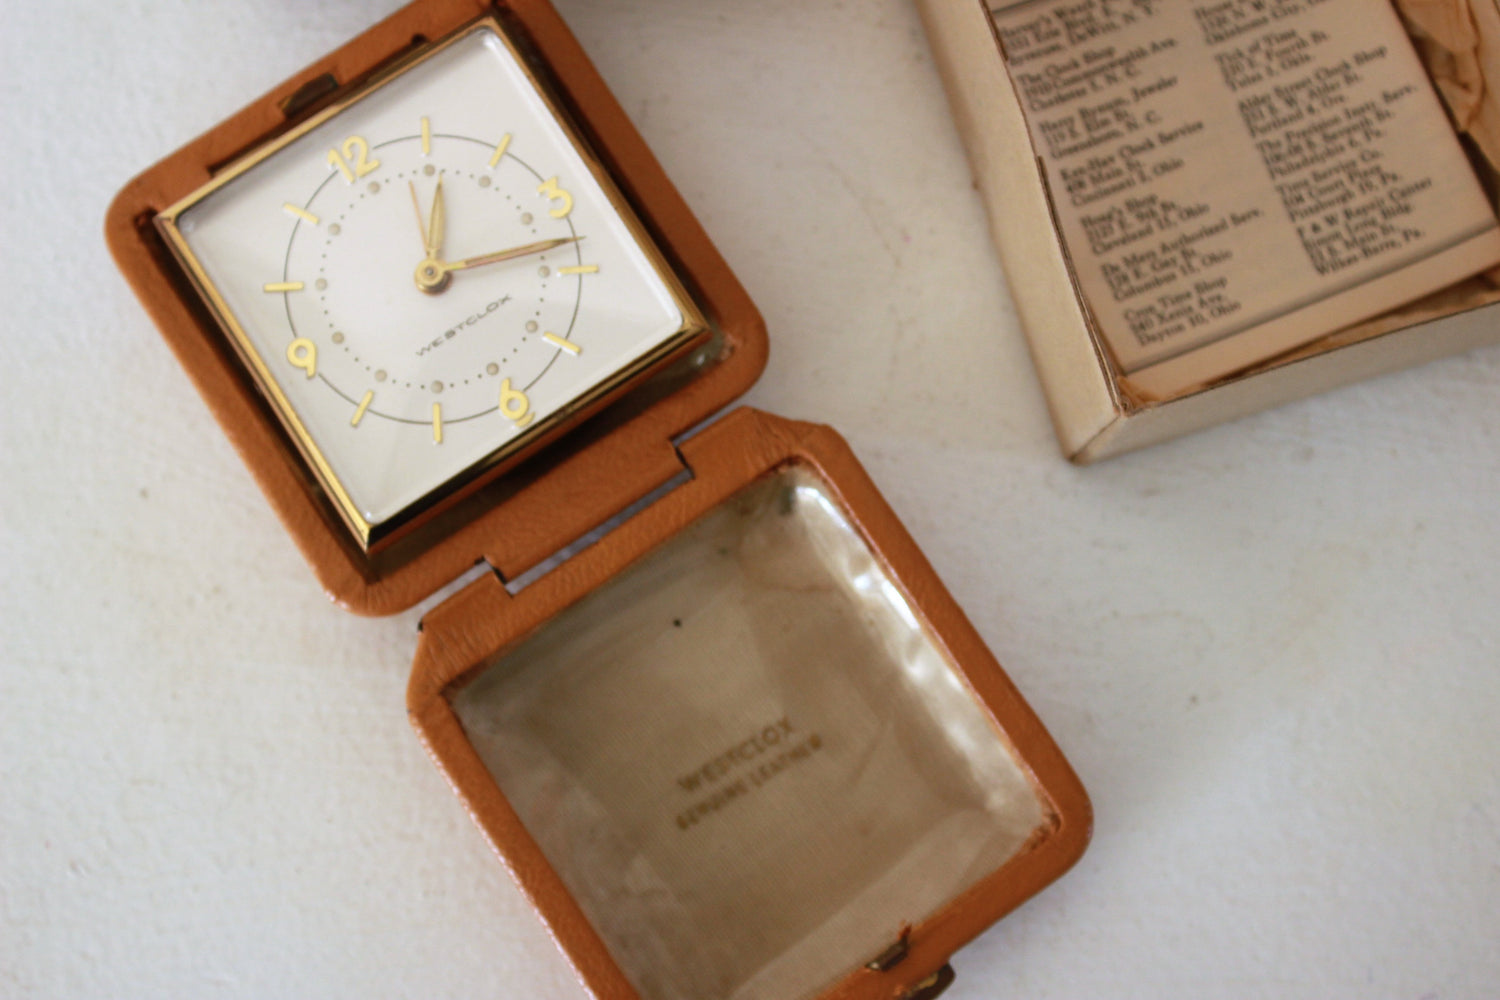 Vintage 1960s Westclox Travette Alarm Clock, New in Box